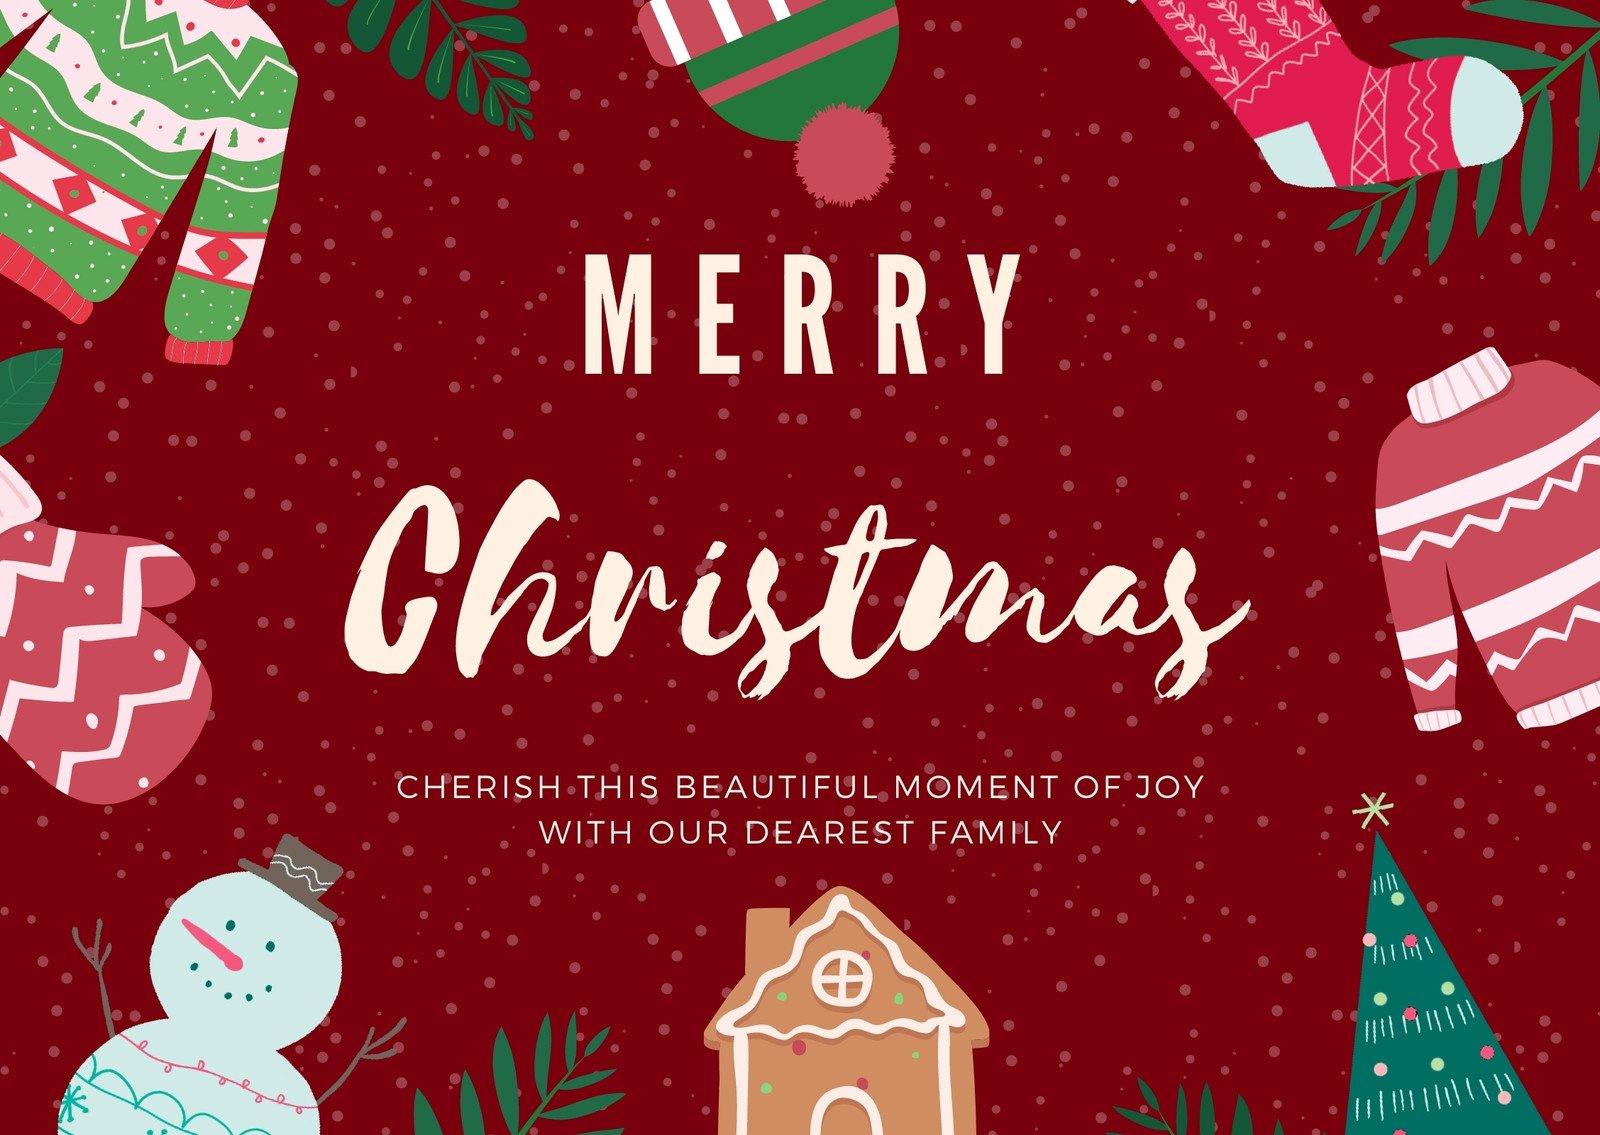 Classic Christmas Greetings Card Regarding Christmas Photo Cards Templates Free Downloads